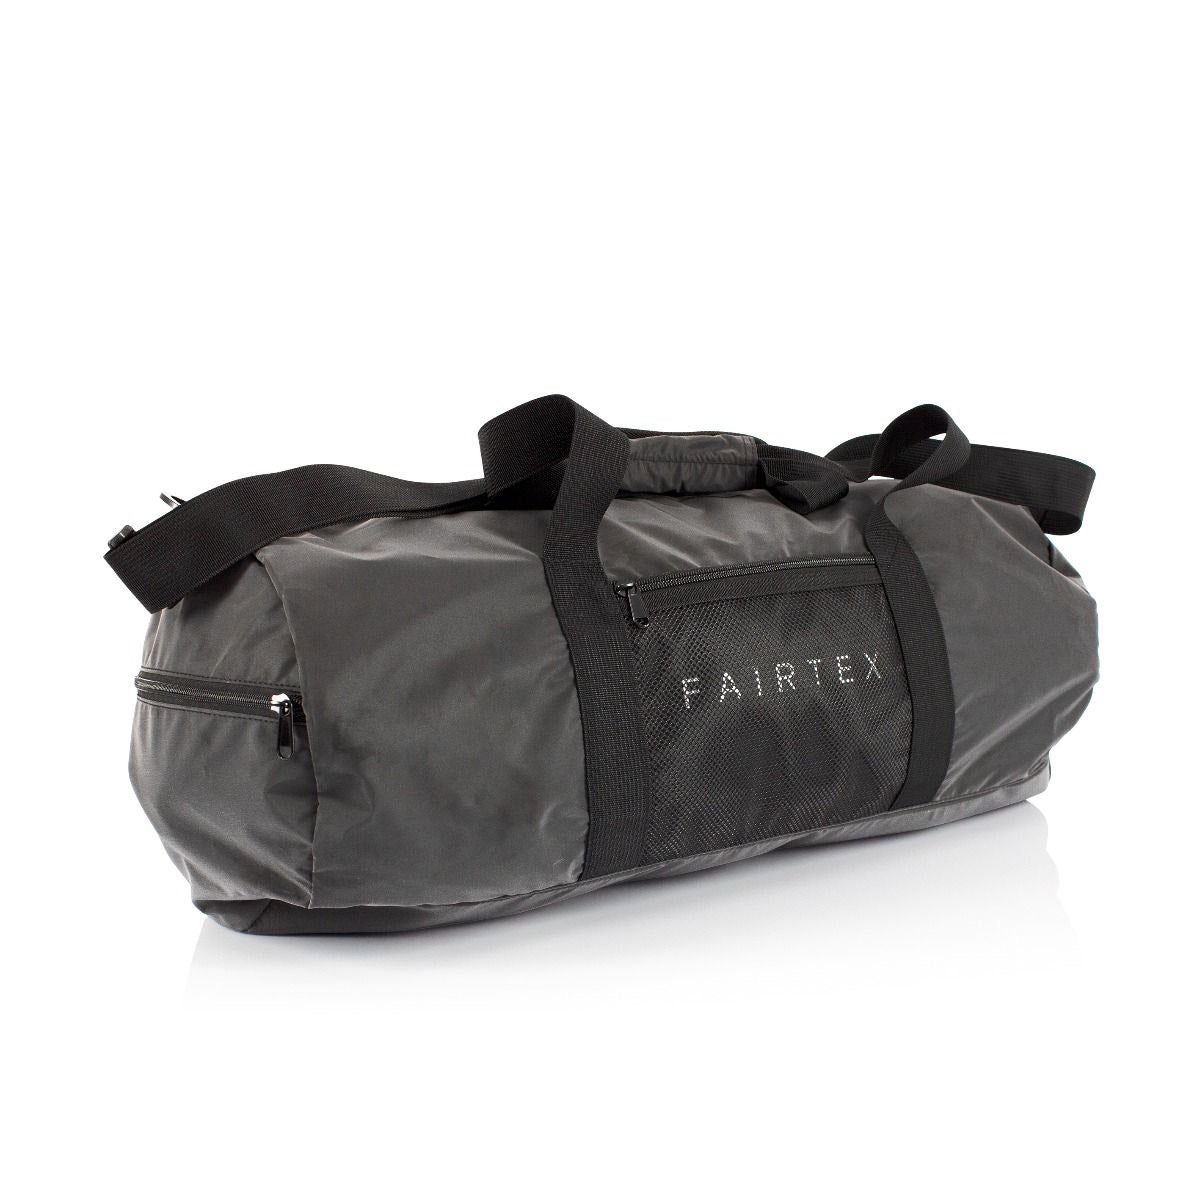 Fairtex Bag 14 Gym Carrybag - SUPER EXPORT SHOP